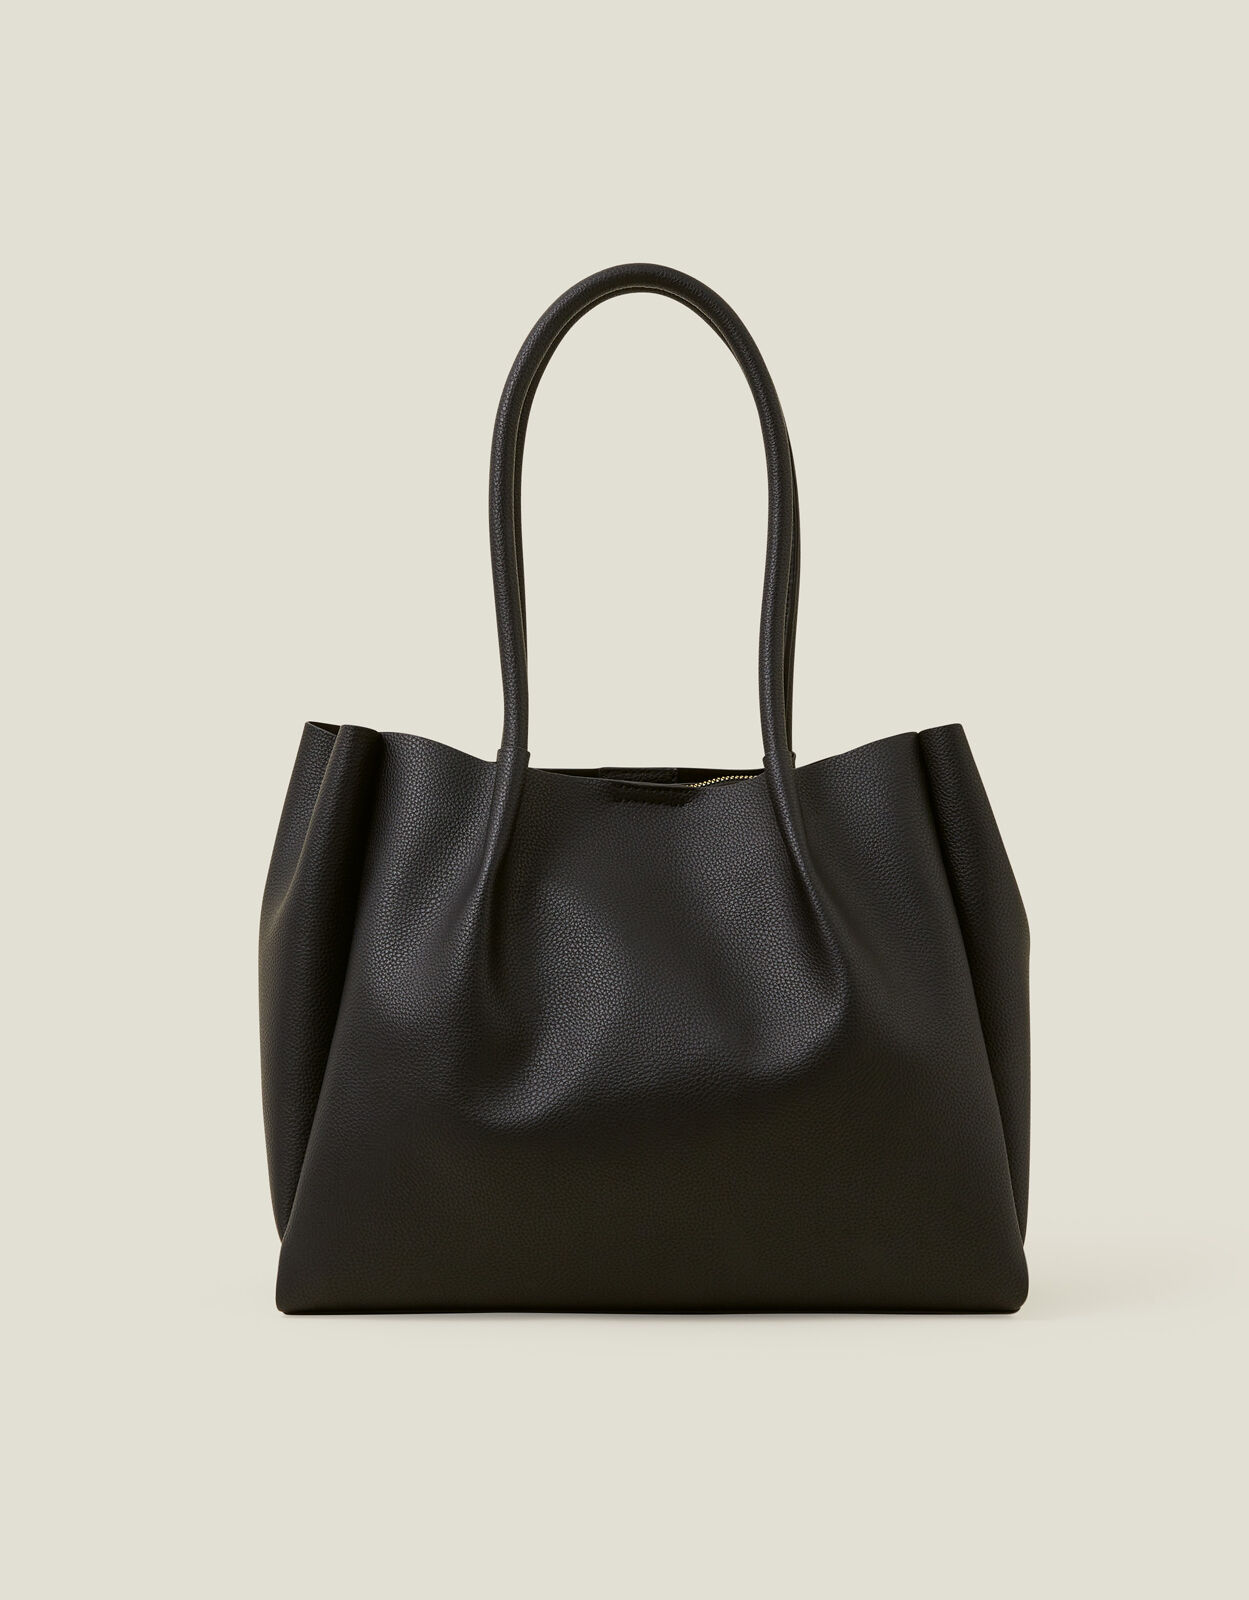 Buy DaisyStar Women Fashion Handbags Tote Purses Stylish Ladies Women And  Girls Handbag at Amazon.in